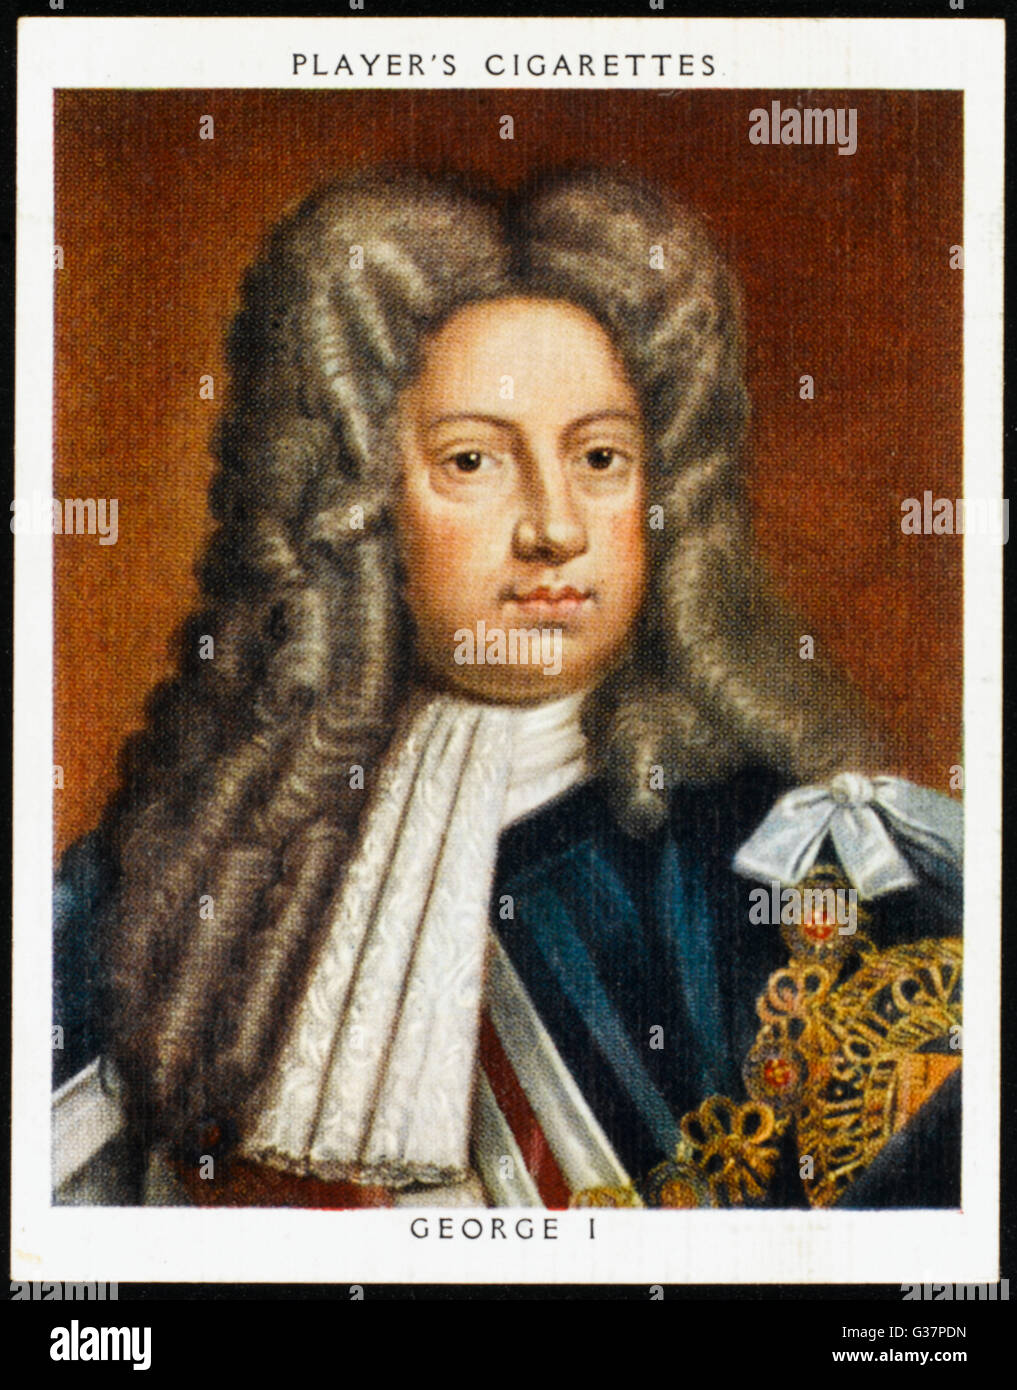 GEORGE I D'ANGLETERRE régna 1714 - 1727 Date : 1660 - 1727 Banque D'Images